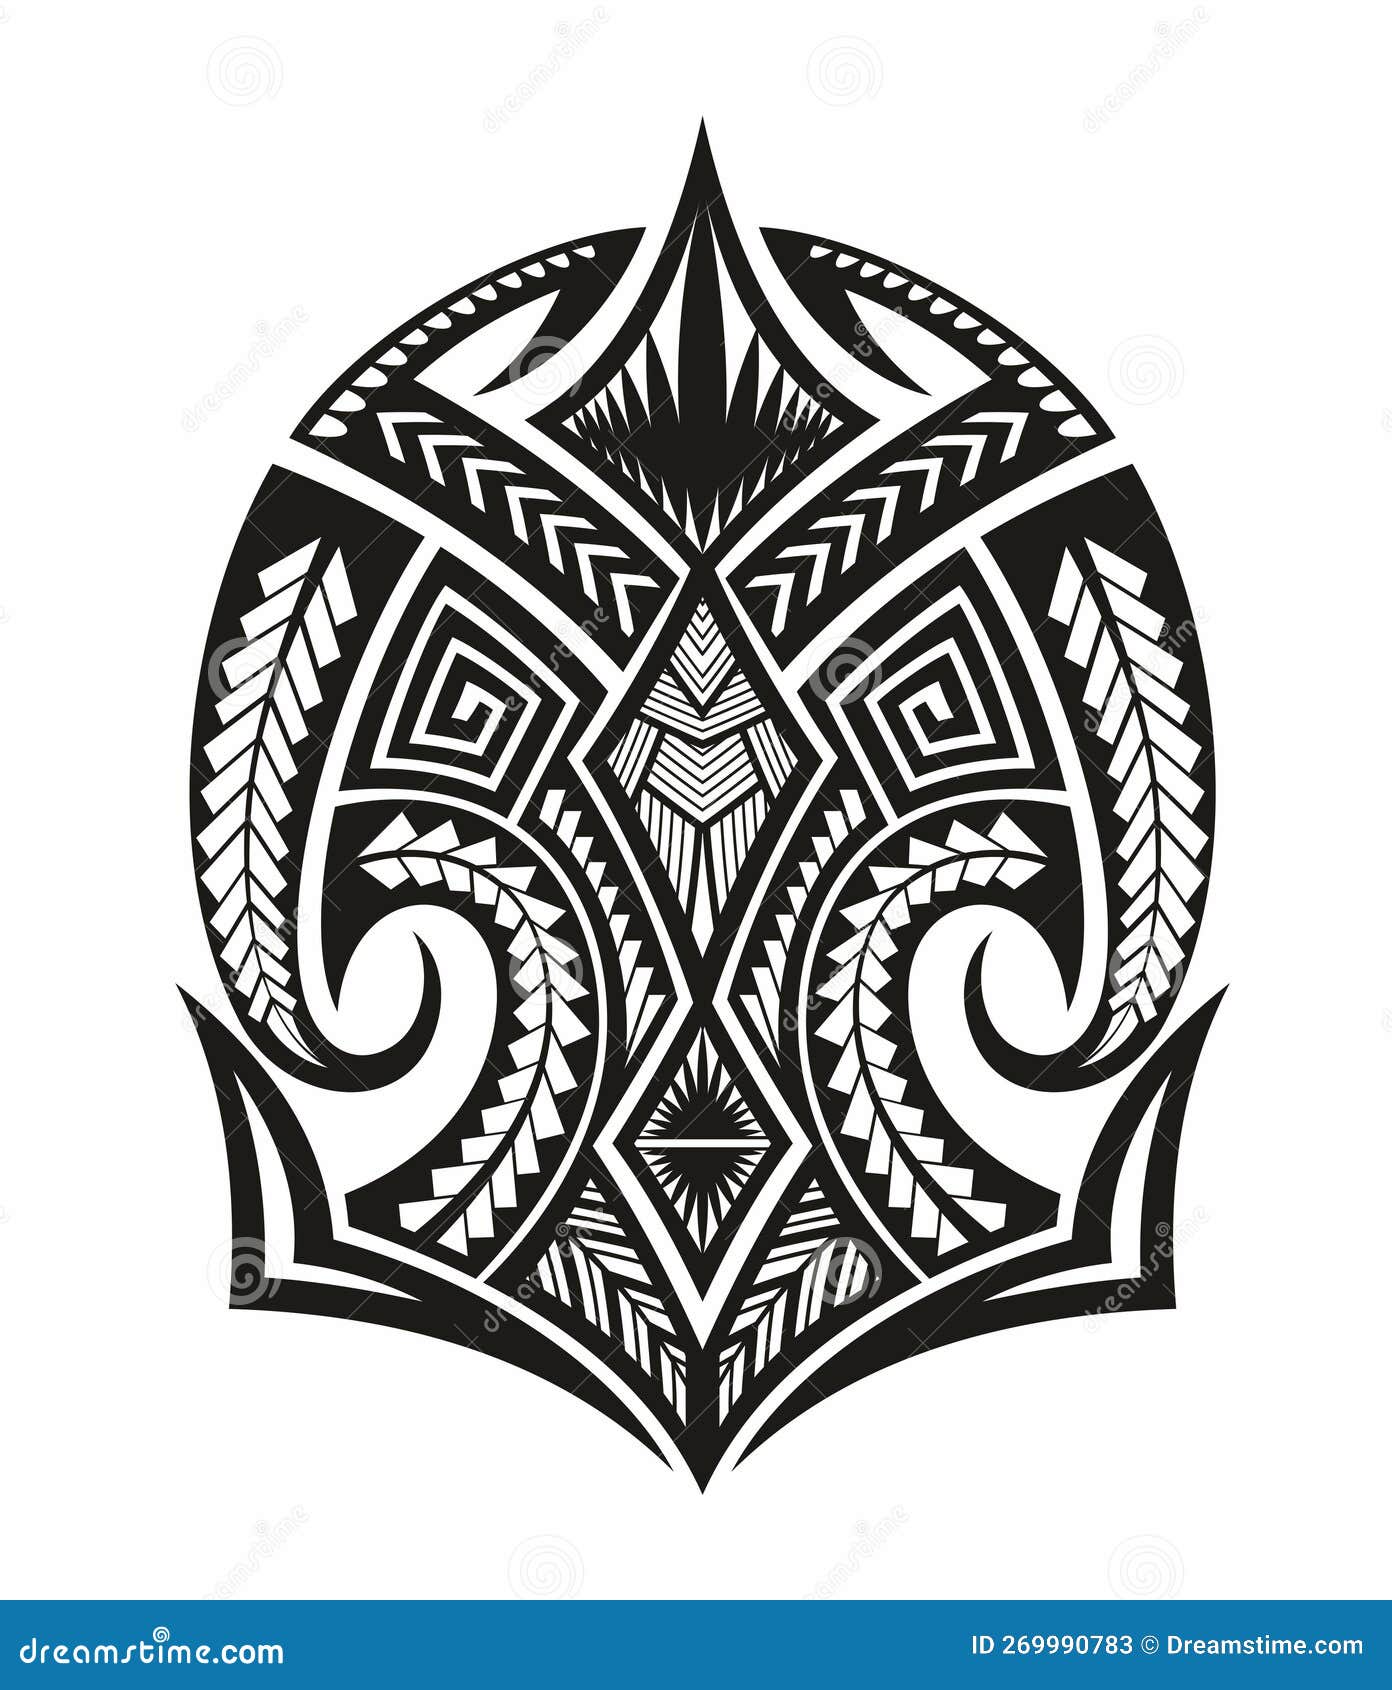 Wrist band (Integration) band sleeve original Polynesian tattoo design